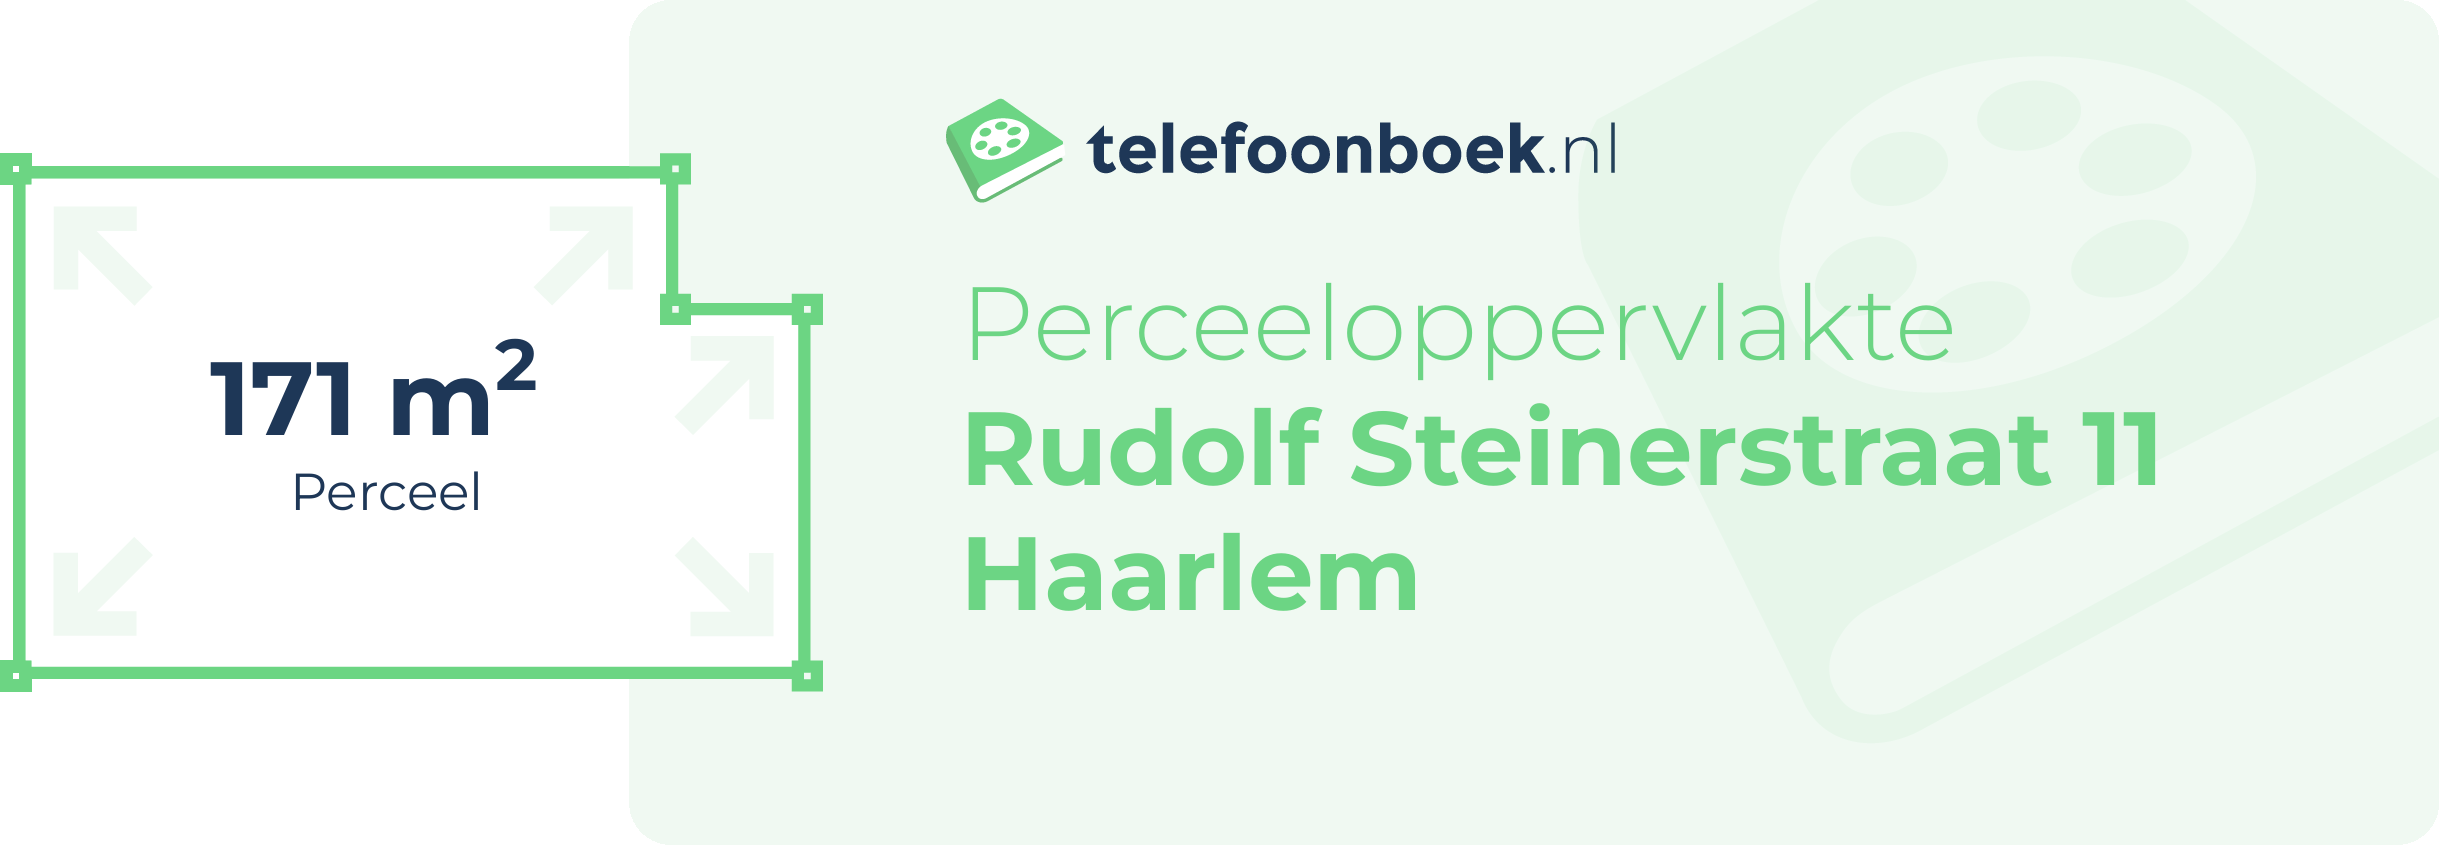 Perceeloppervlakte Rudolf Steinerstraat 11 Haarlem